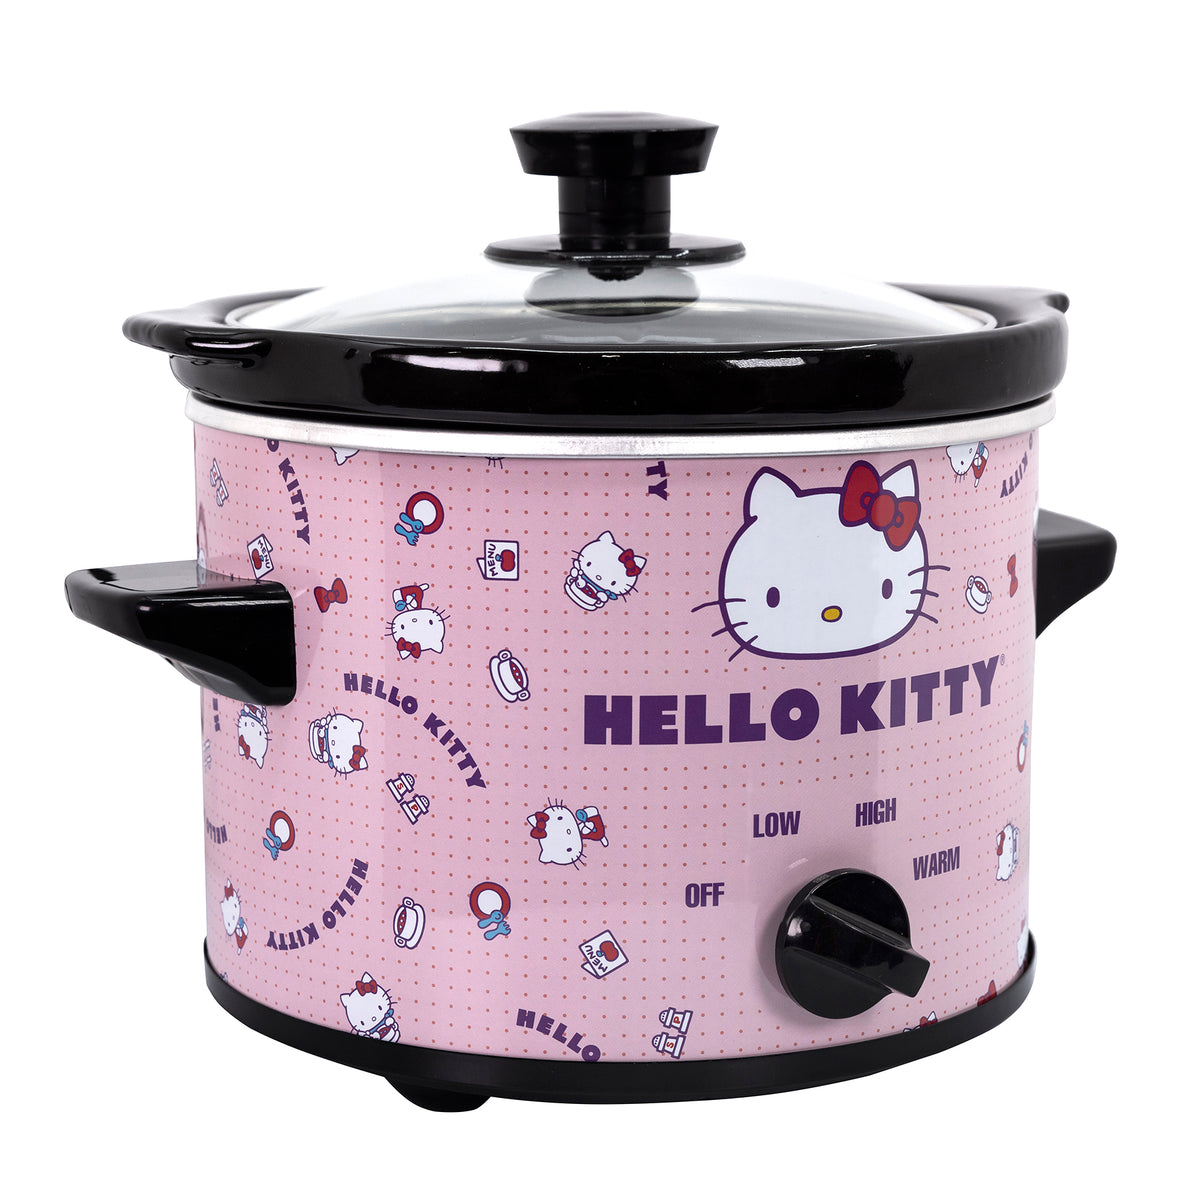 HELLO KITTY mini rice cooker small cooker MINI RICE COOKER